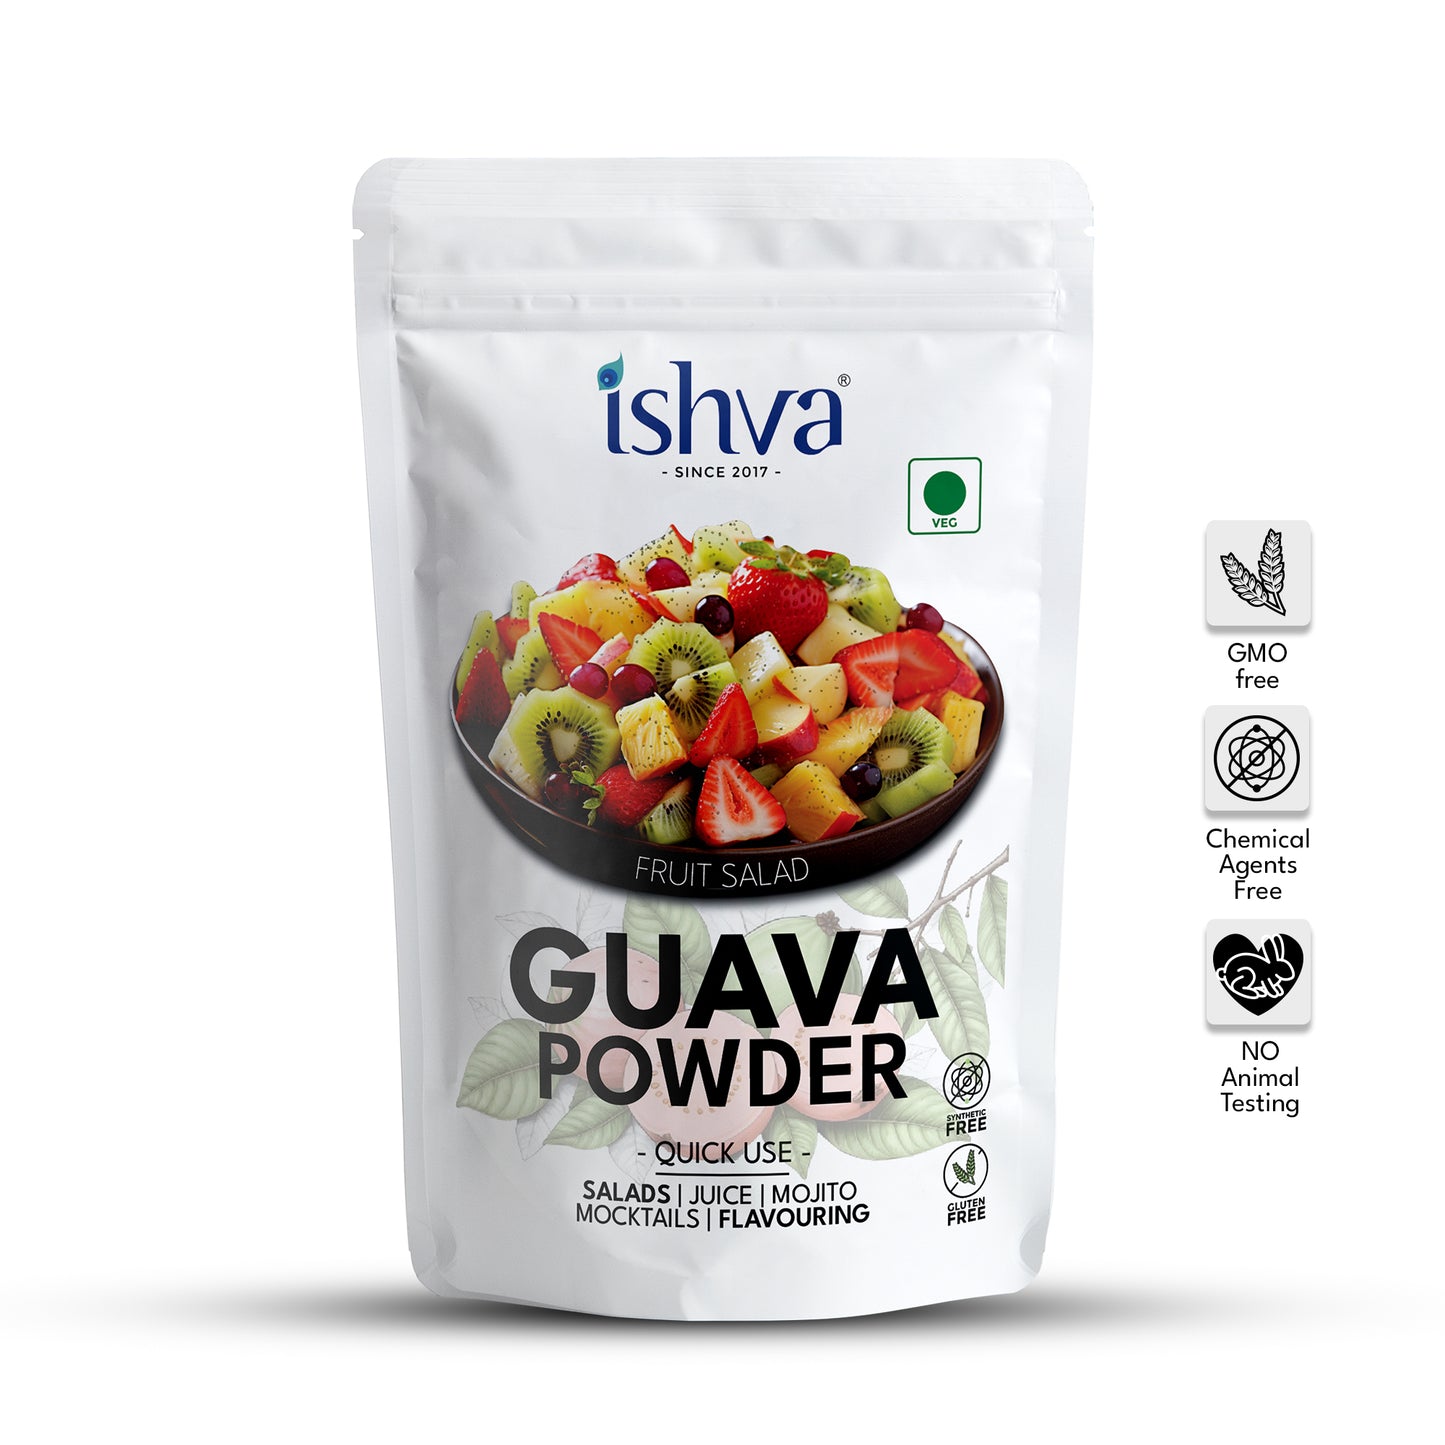 Ishva Guava Powder - Flavor for Salads